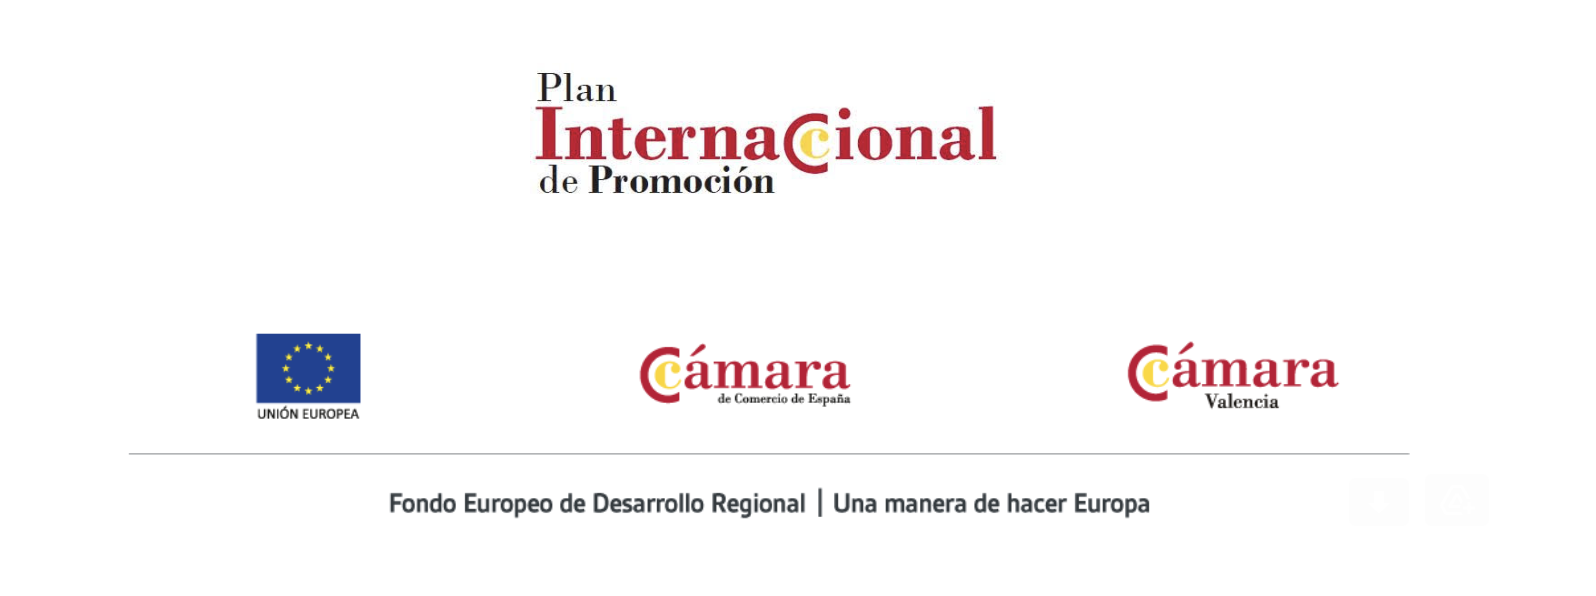 plan internacional de promoción